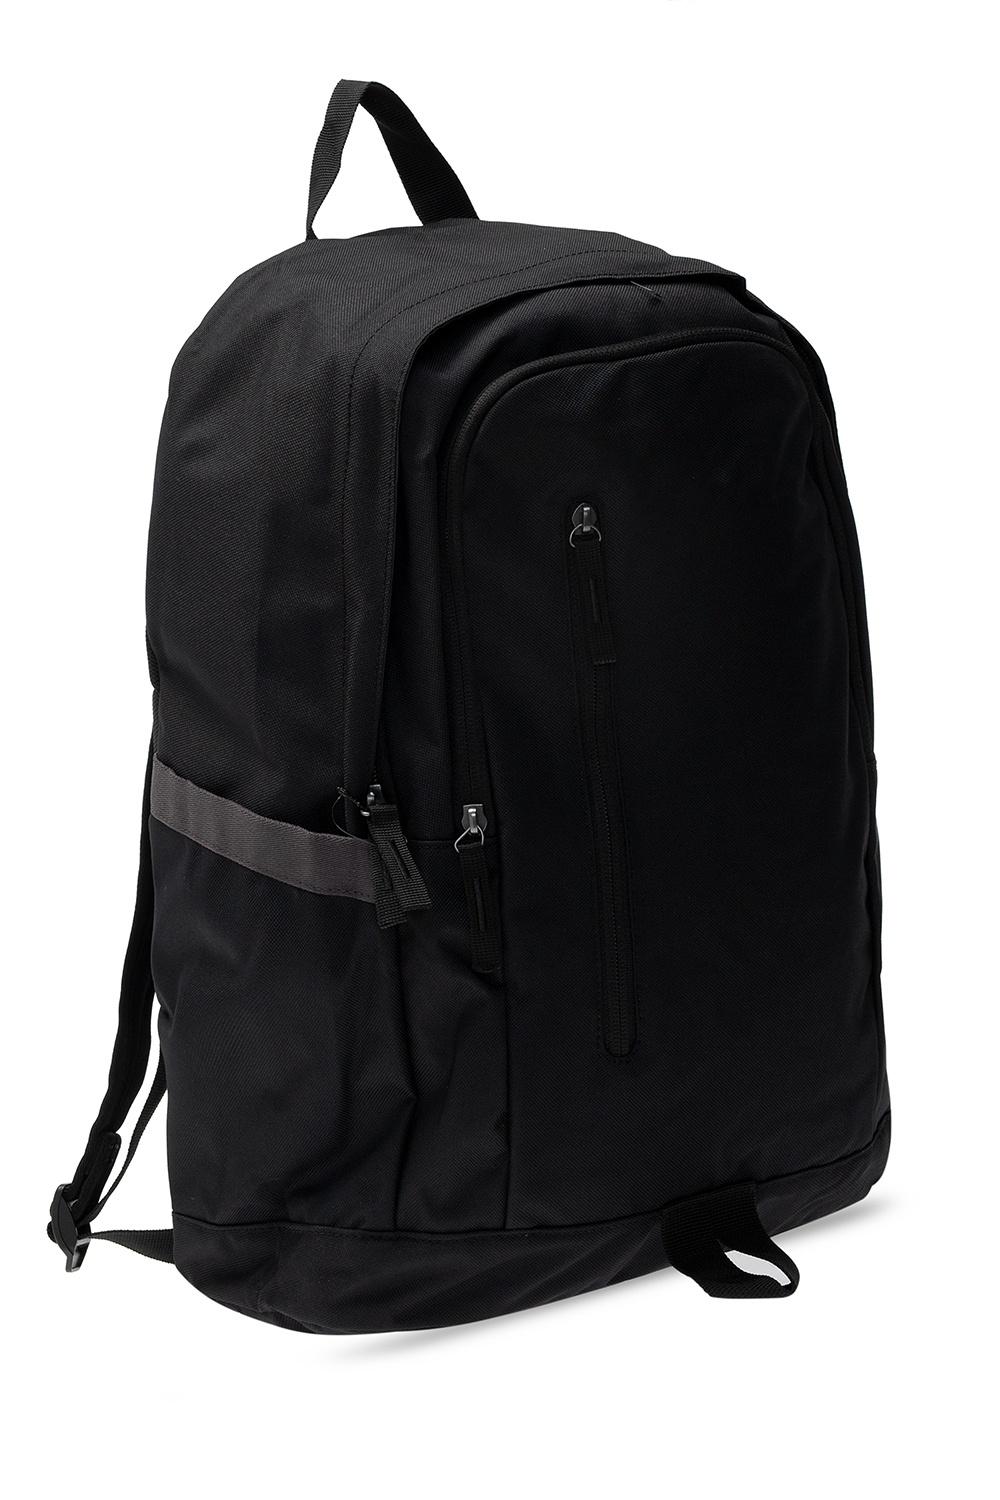 Nike All Access Soleday Backpack in Black | Lyst Australia